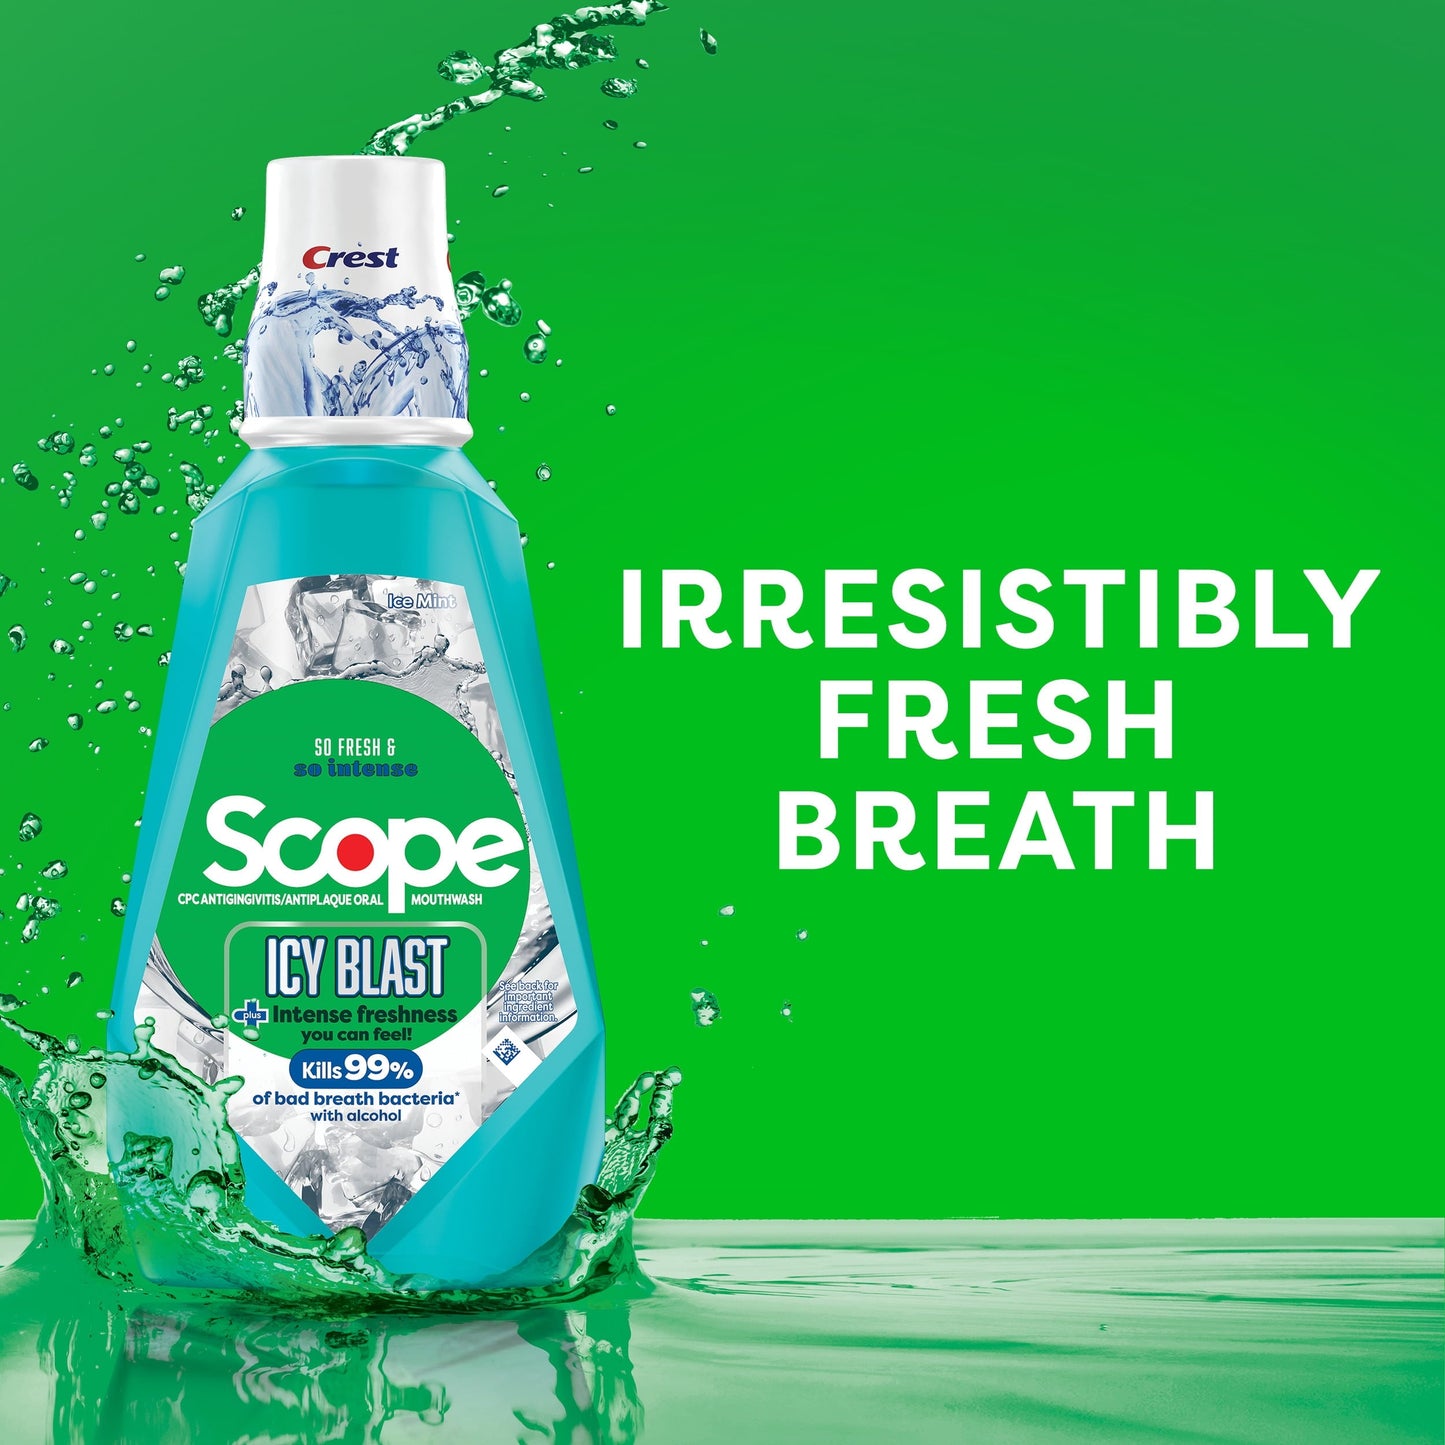 Crest Scope Icy Blast Mouthwash with Alcohol, 1L, 33.8 fl oz